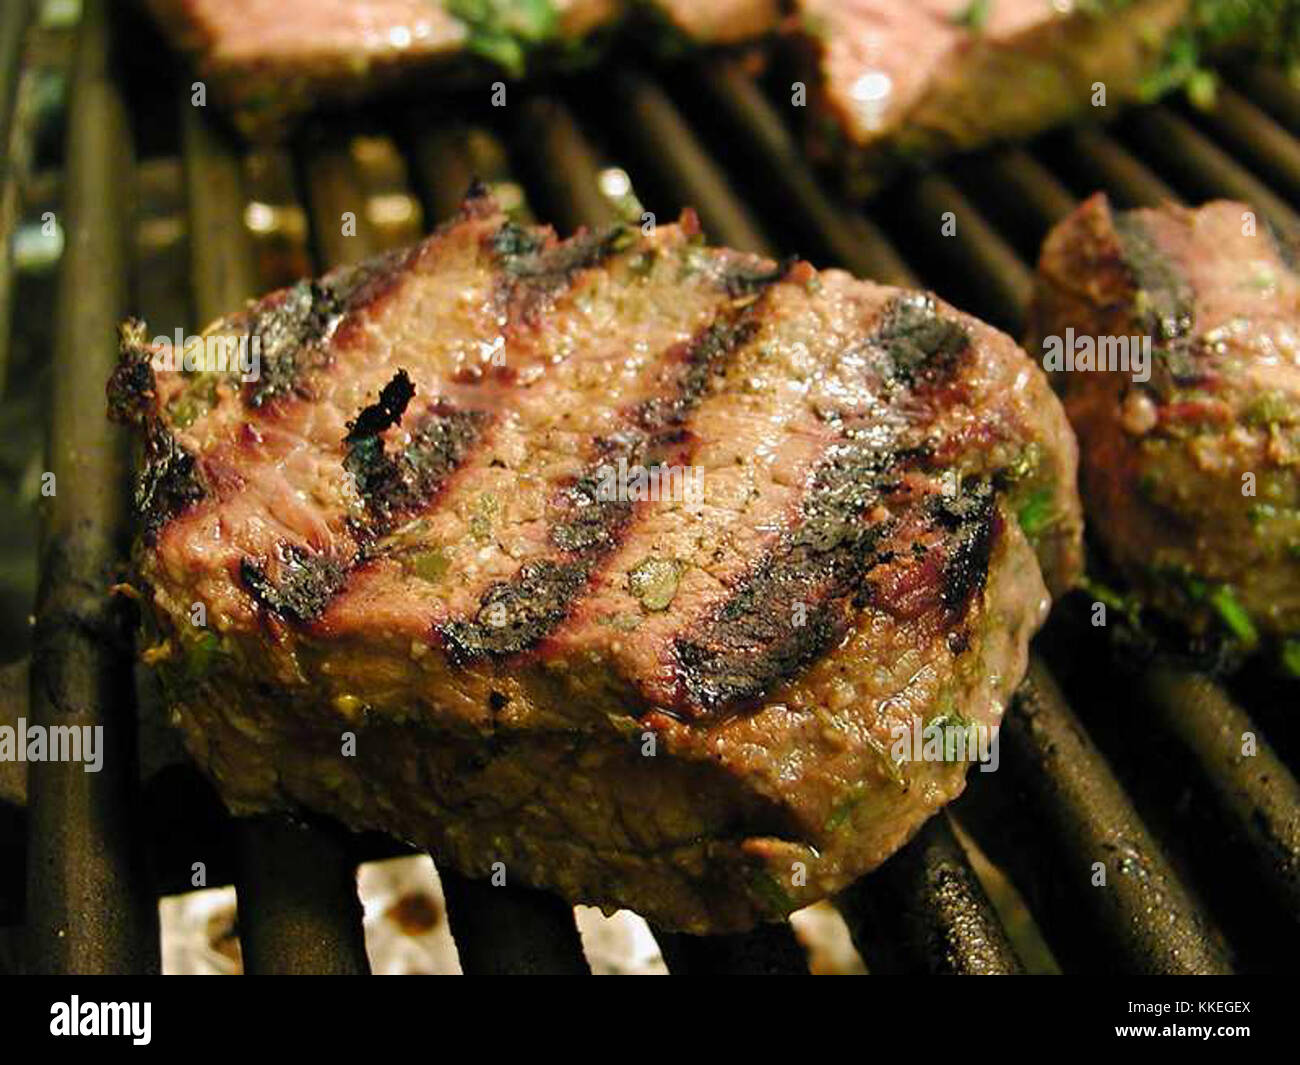 Steak bj Stock Photo